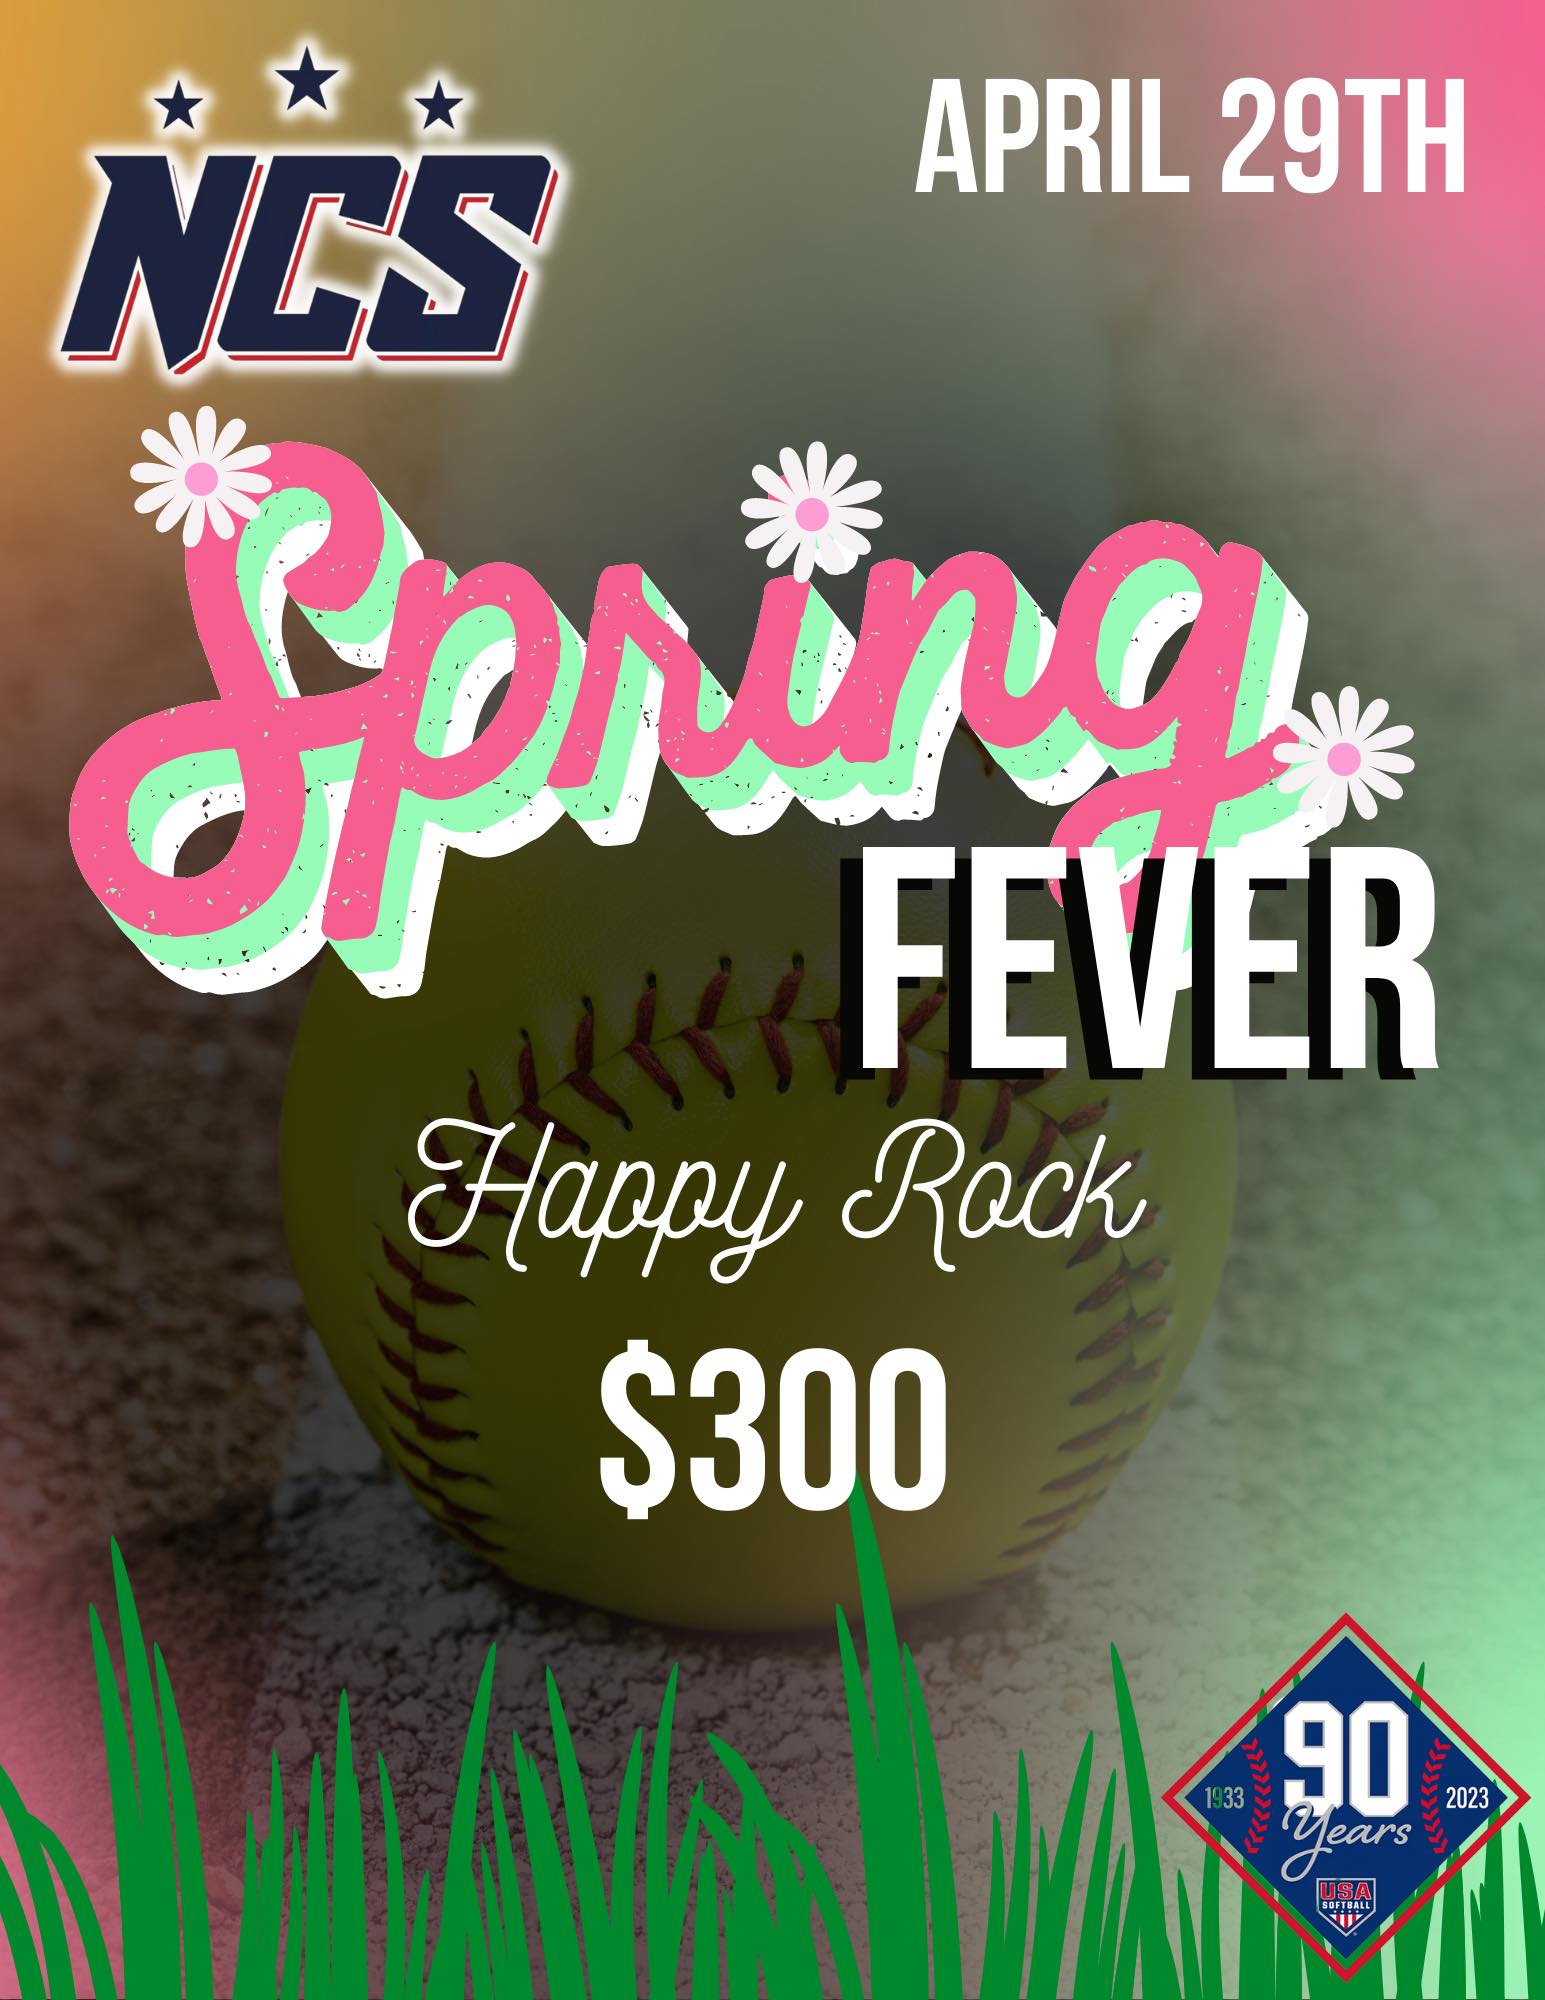 Spring Fever Logo